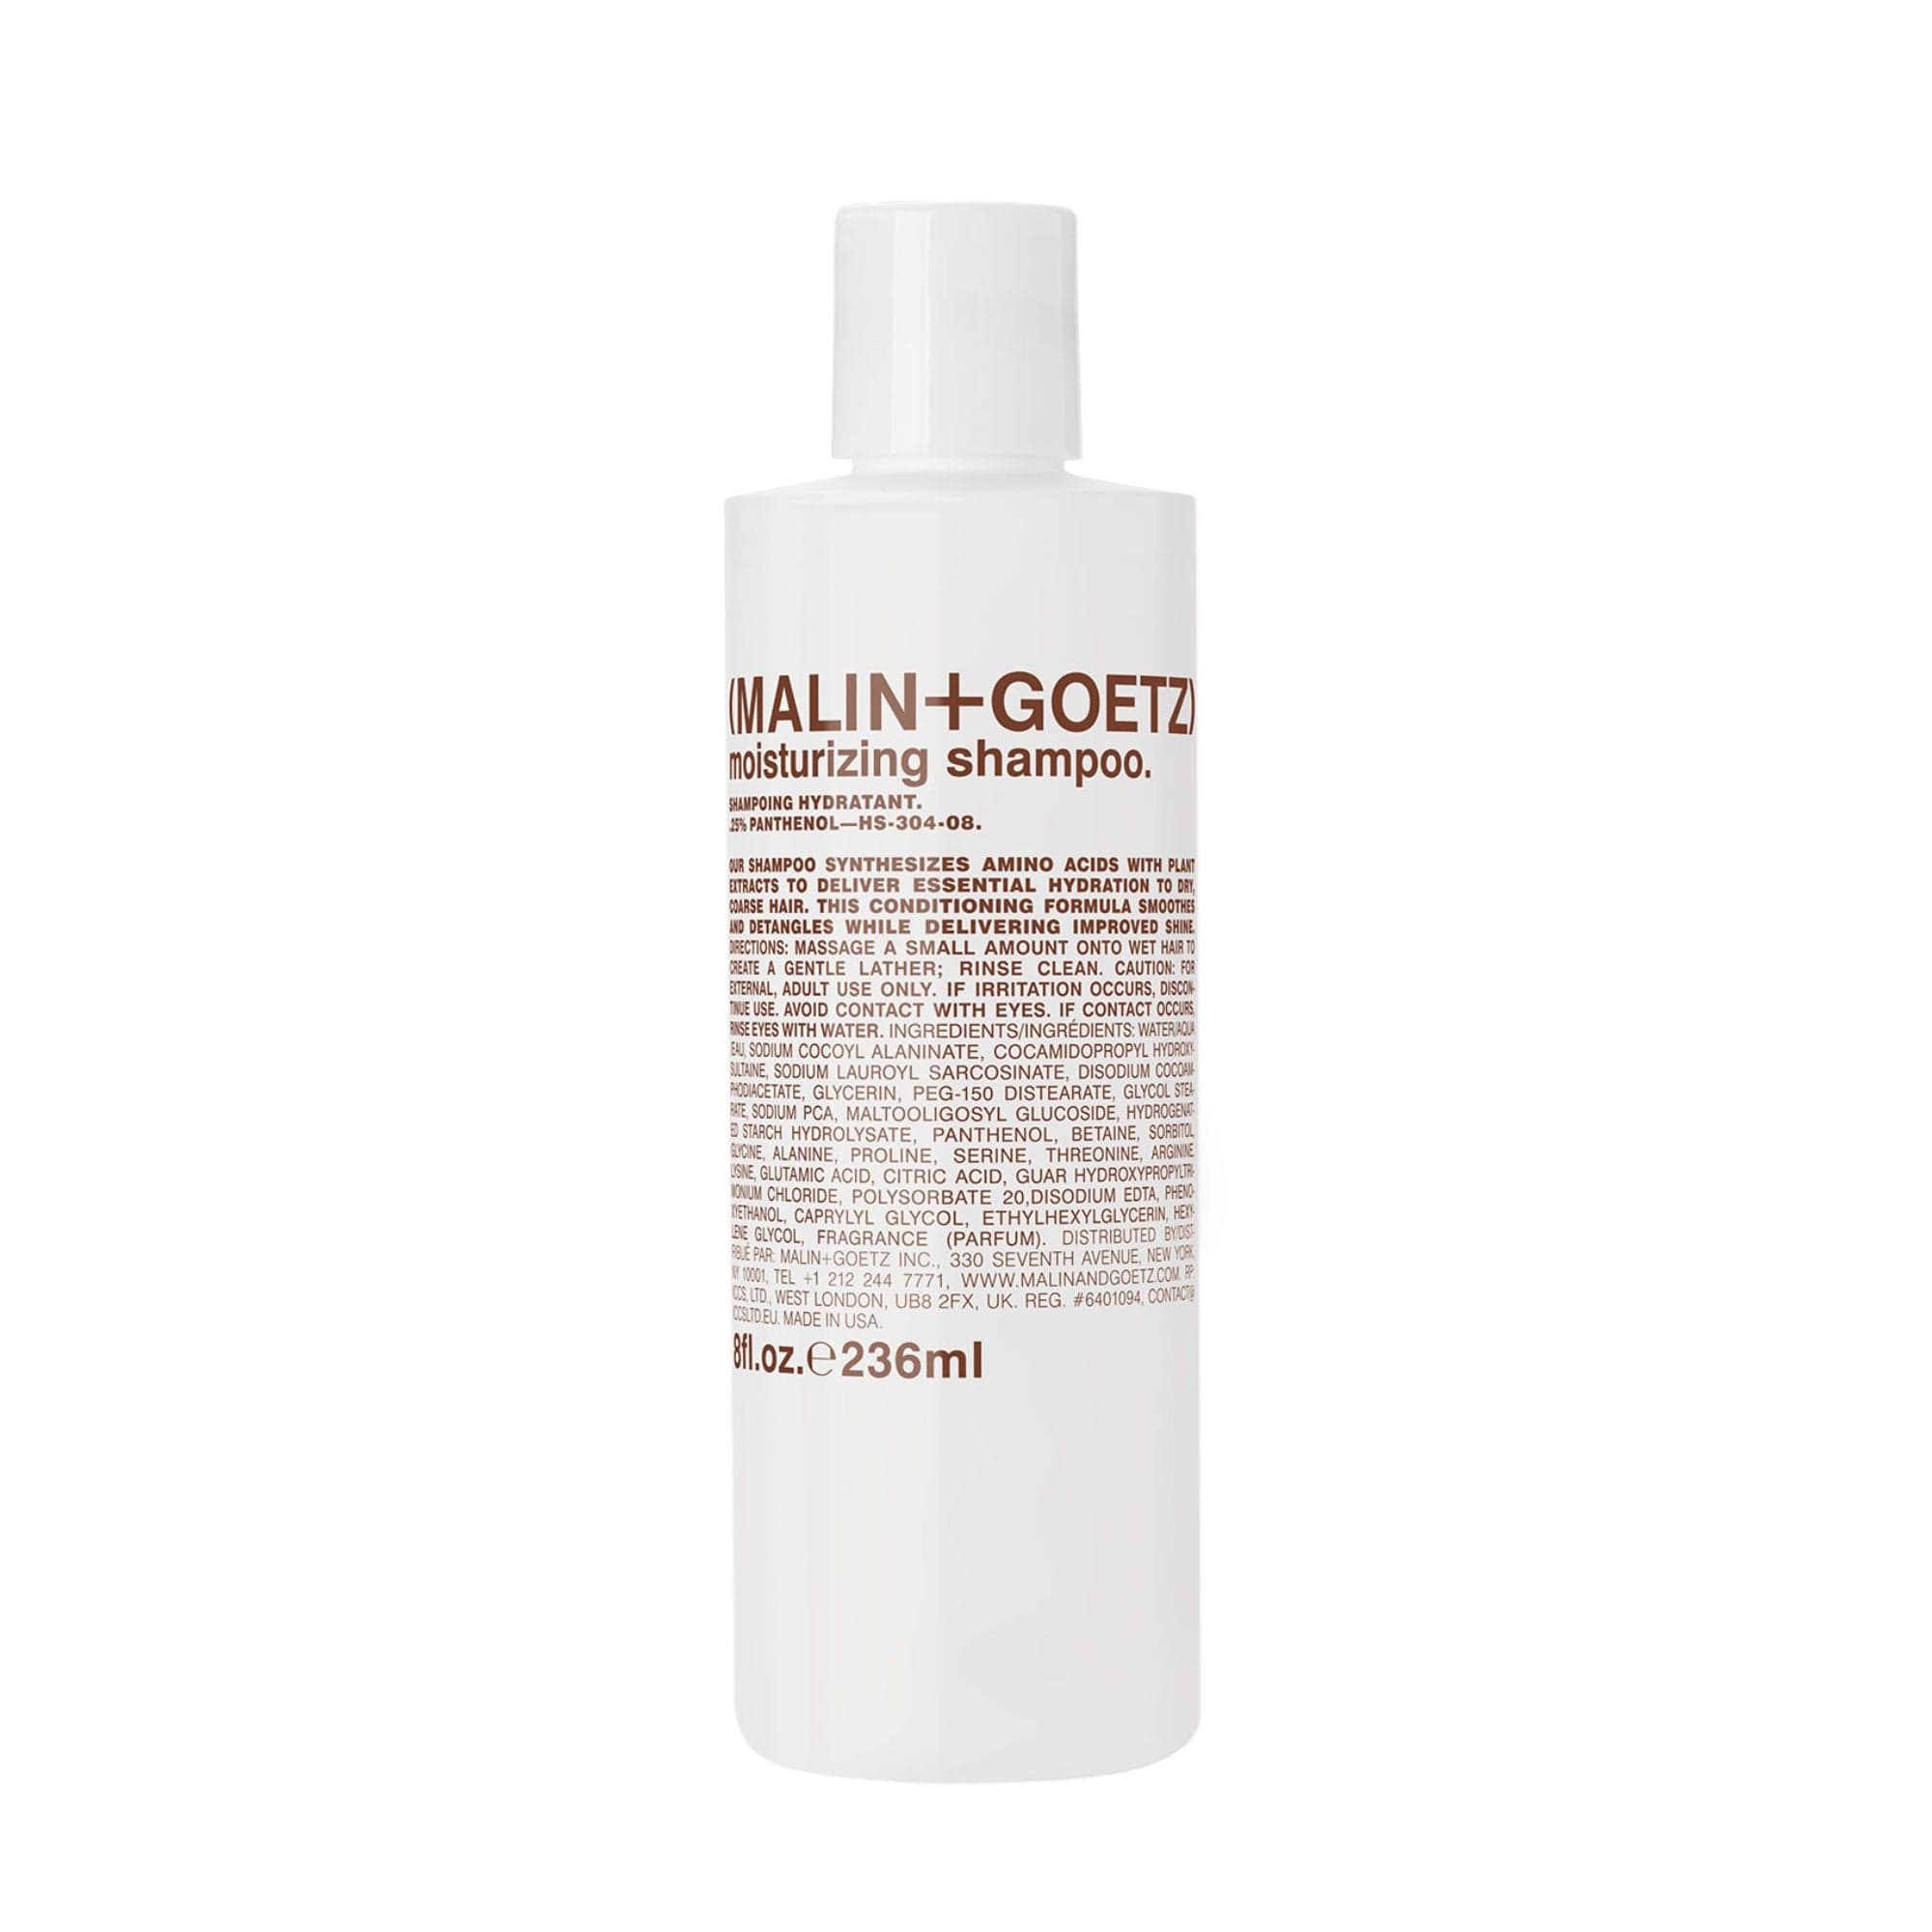 Moisturizing Shampoo de (MALIN+GOETZ) - Champú hidratante